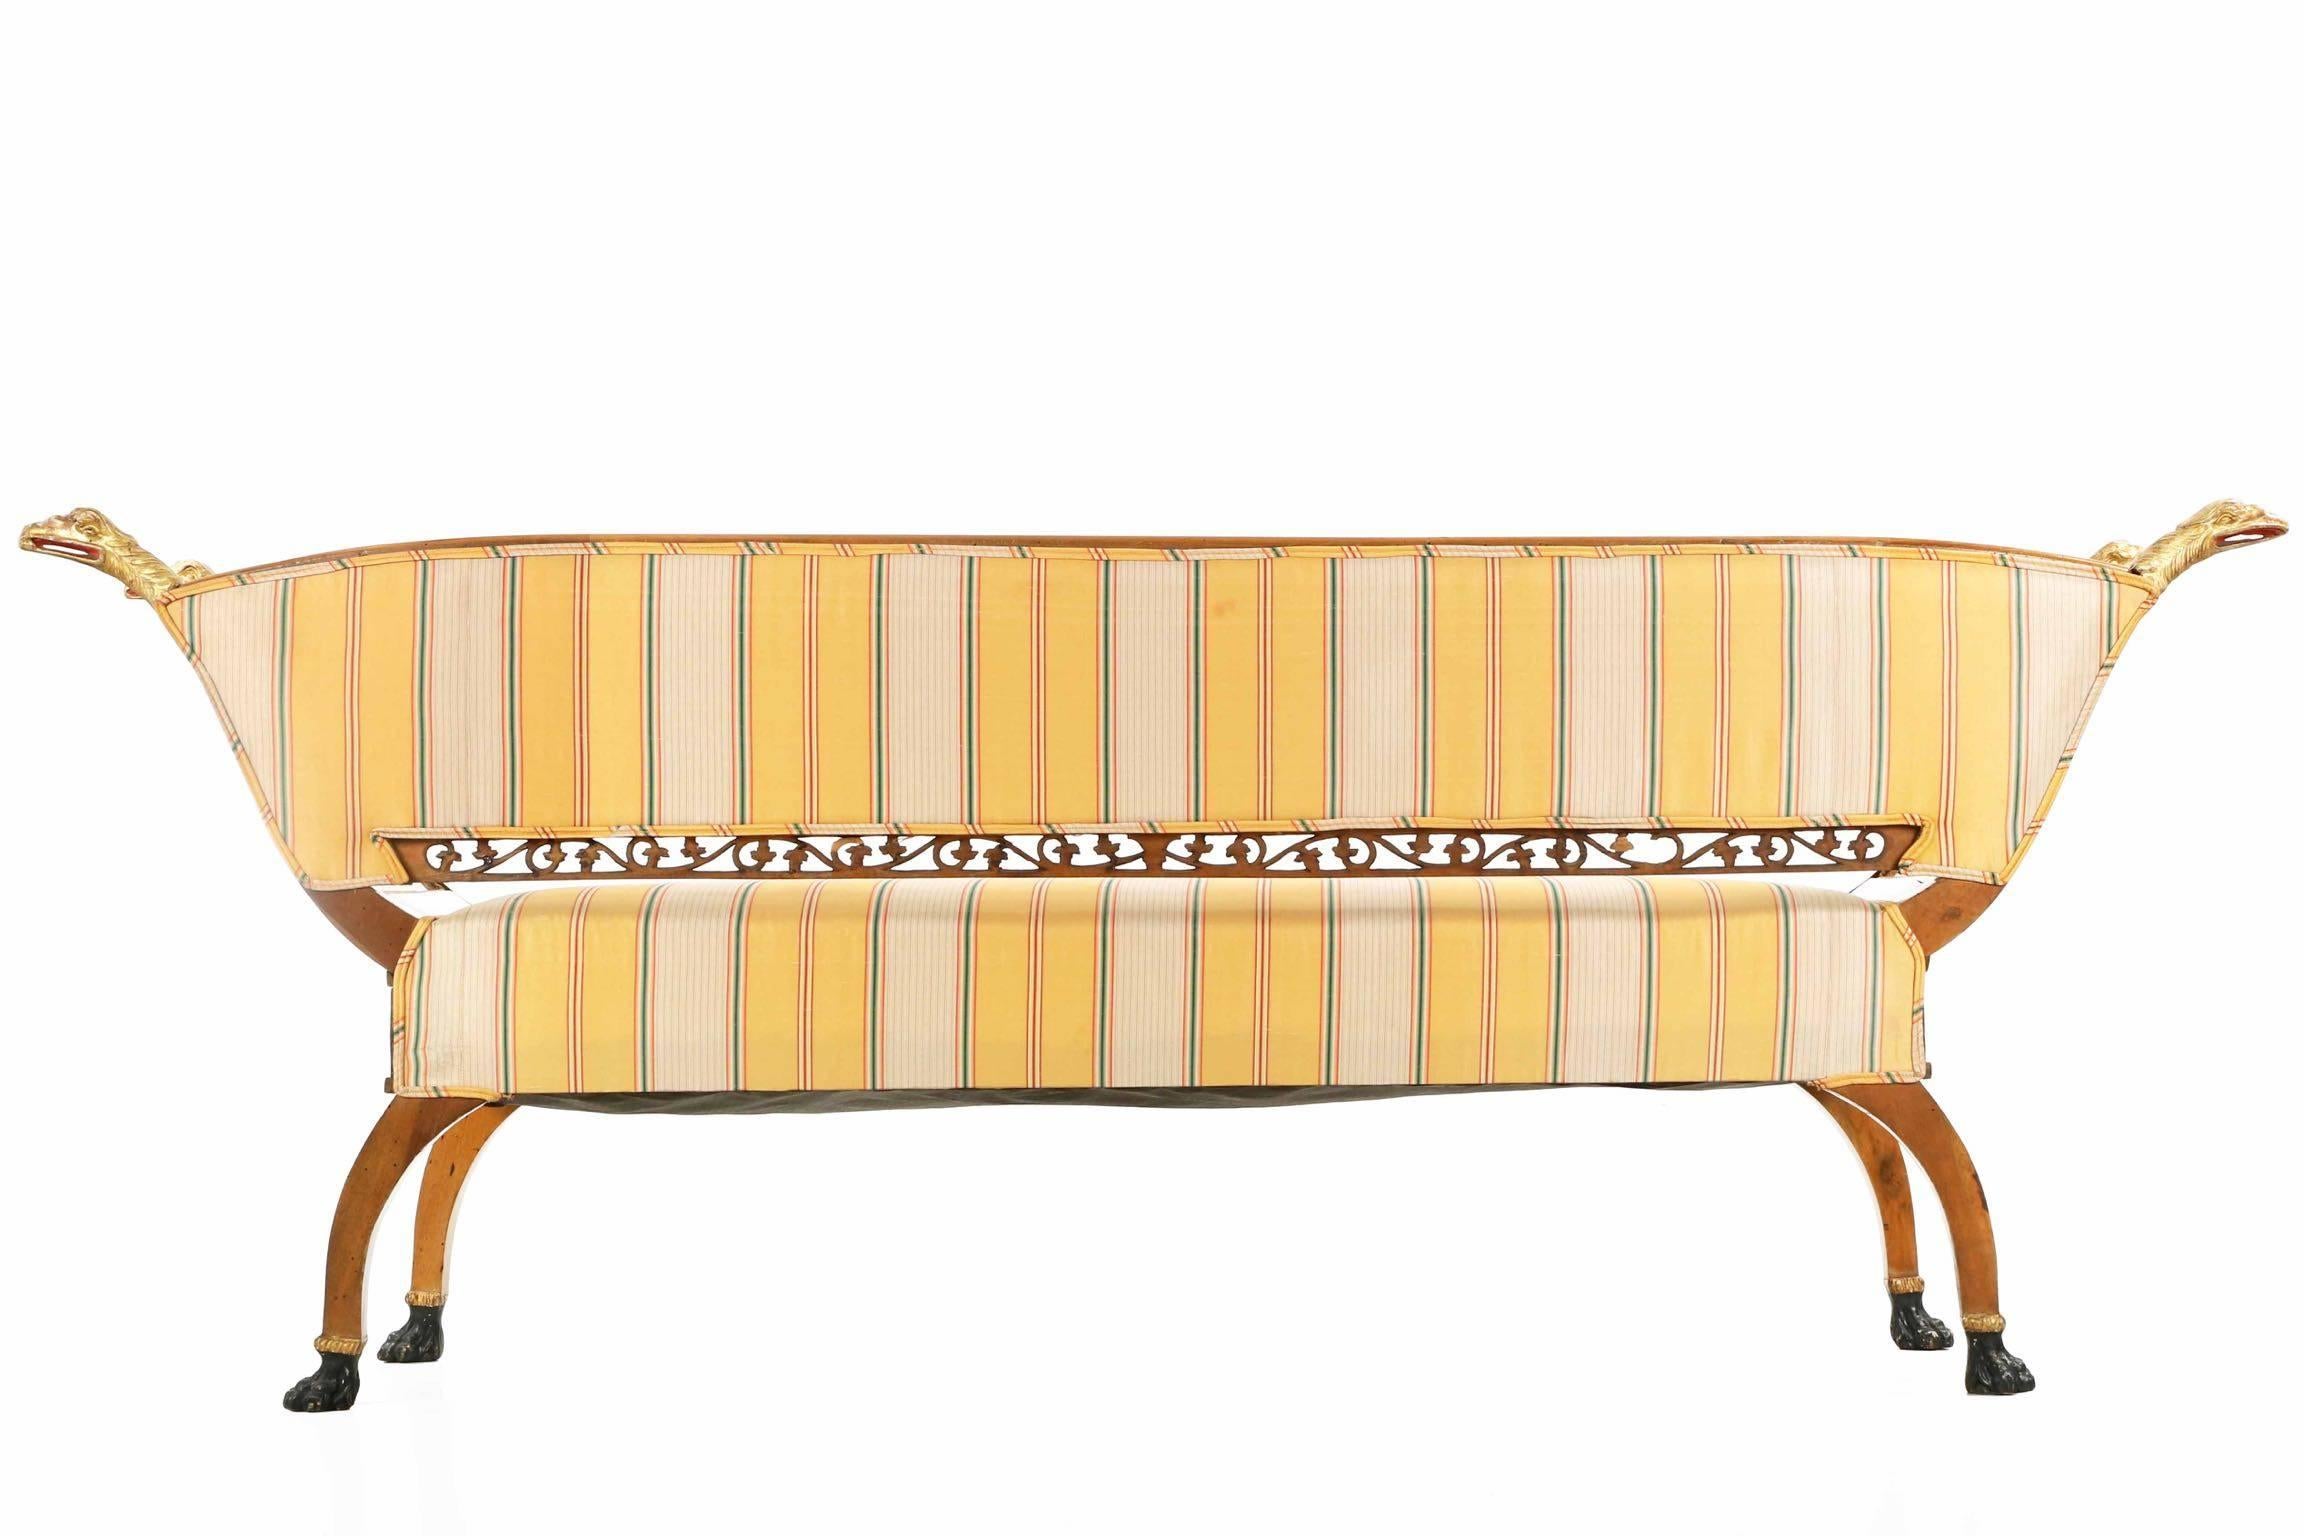 European Fine Neoclassical Parcel-Gilt and Ebonized Canapé Settee Sofa, 19th Century